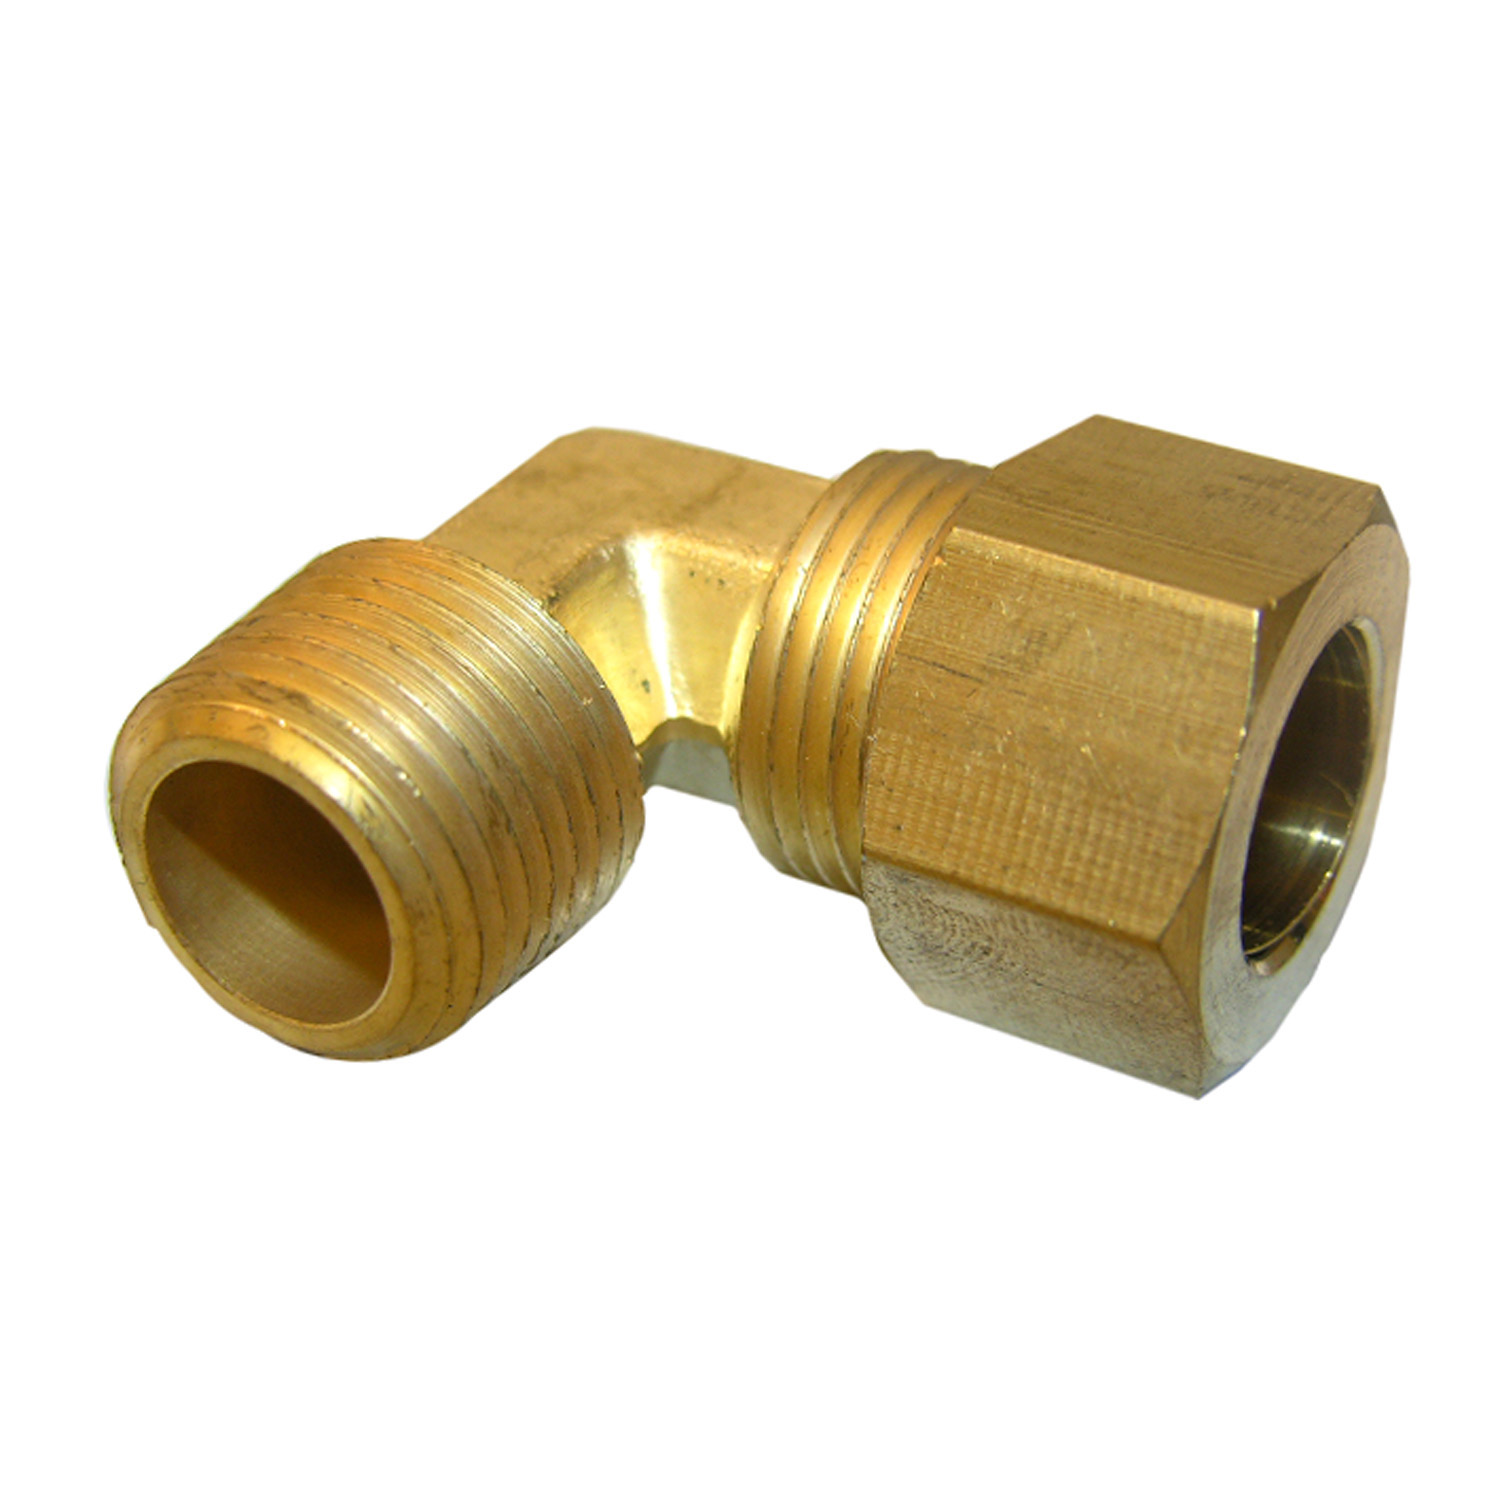 17-6947 Pipe Elbow, 1/2 x 3/8 in, Compression x MIP, 90 deg Angle, Brass, 150 psi Pressure